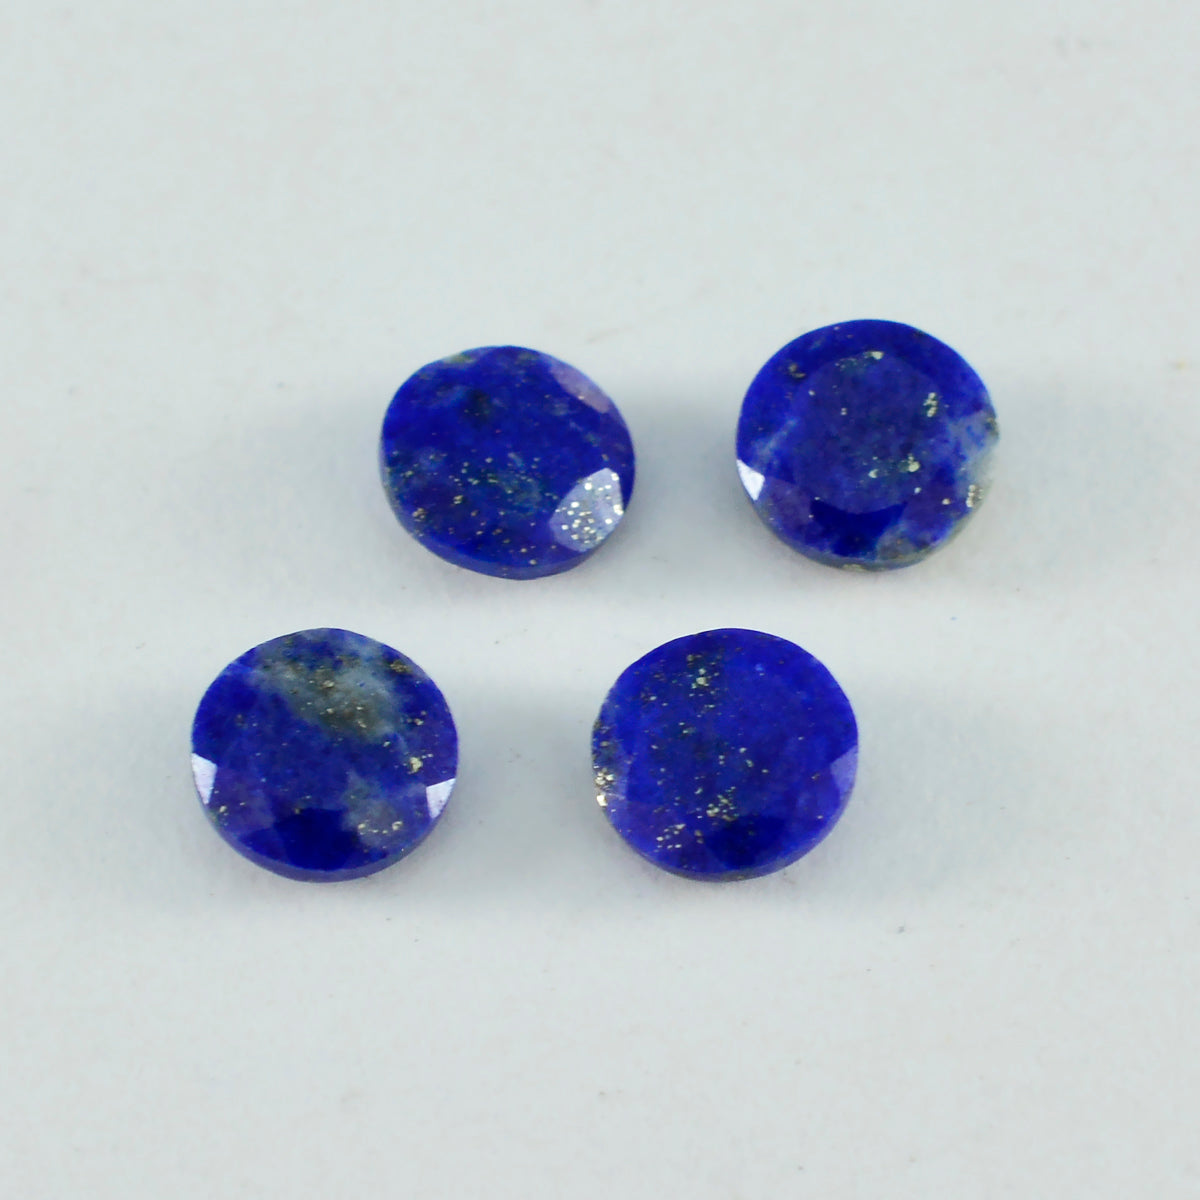 riyogems 1pc 本物のブルー ラピスラズリ ファセット 11x11 mm ラウンド形状 a1 品質の宝石